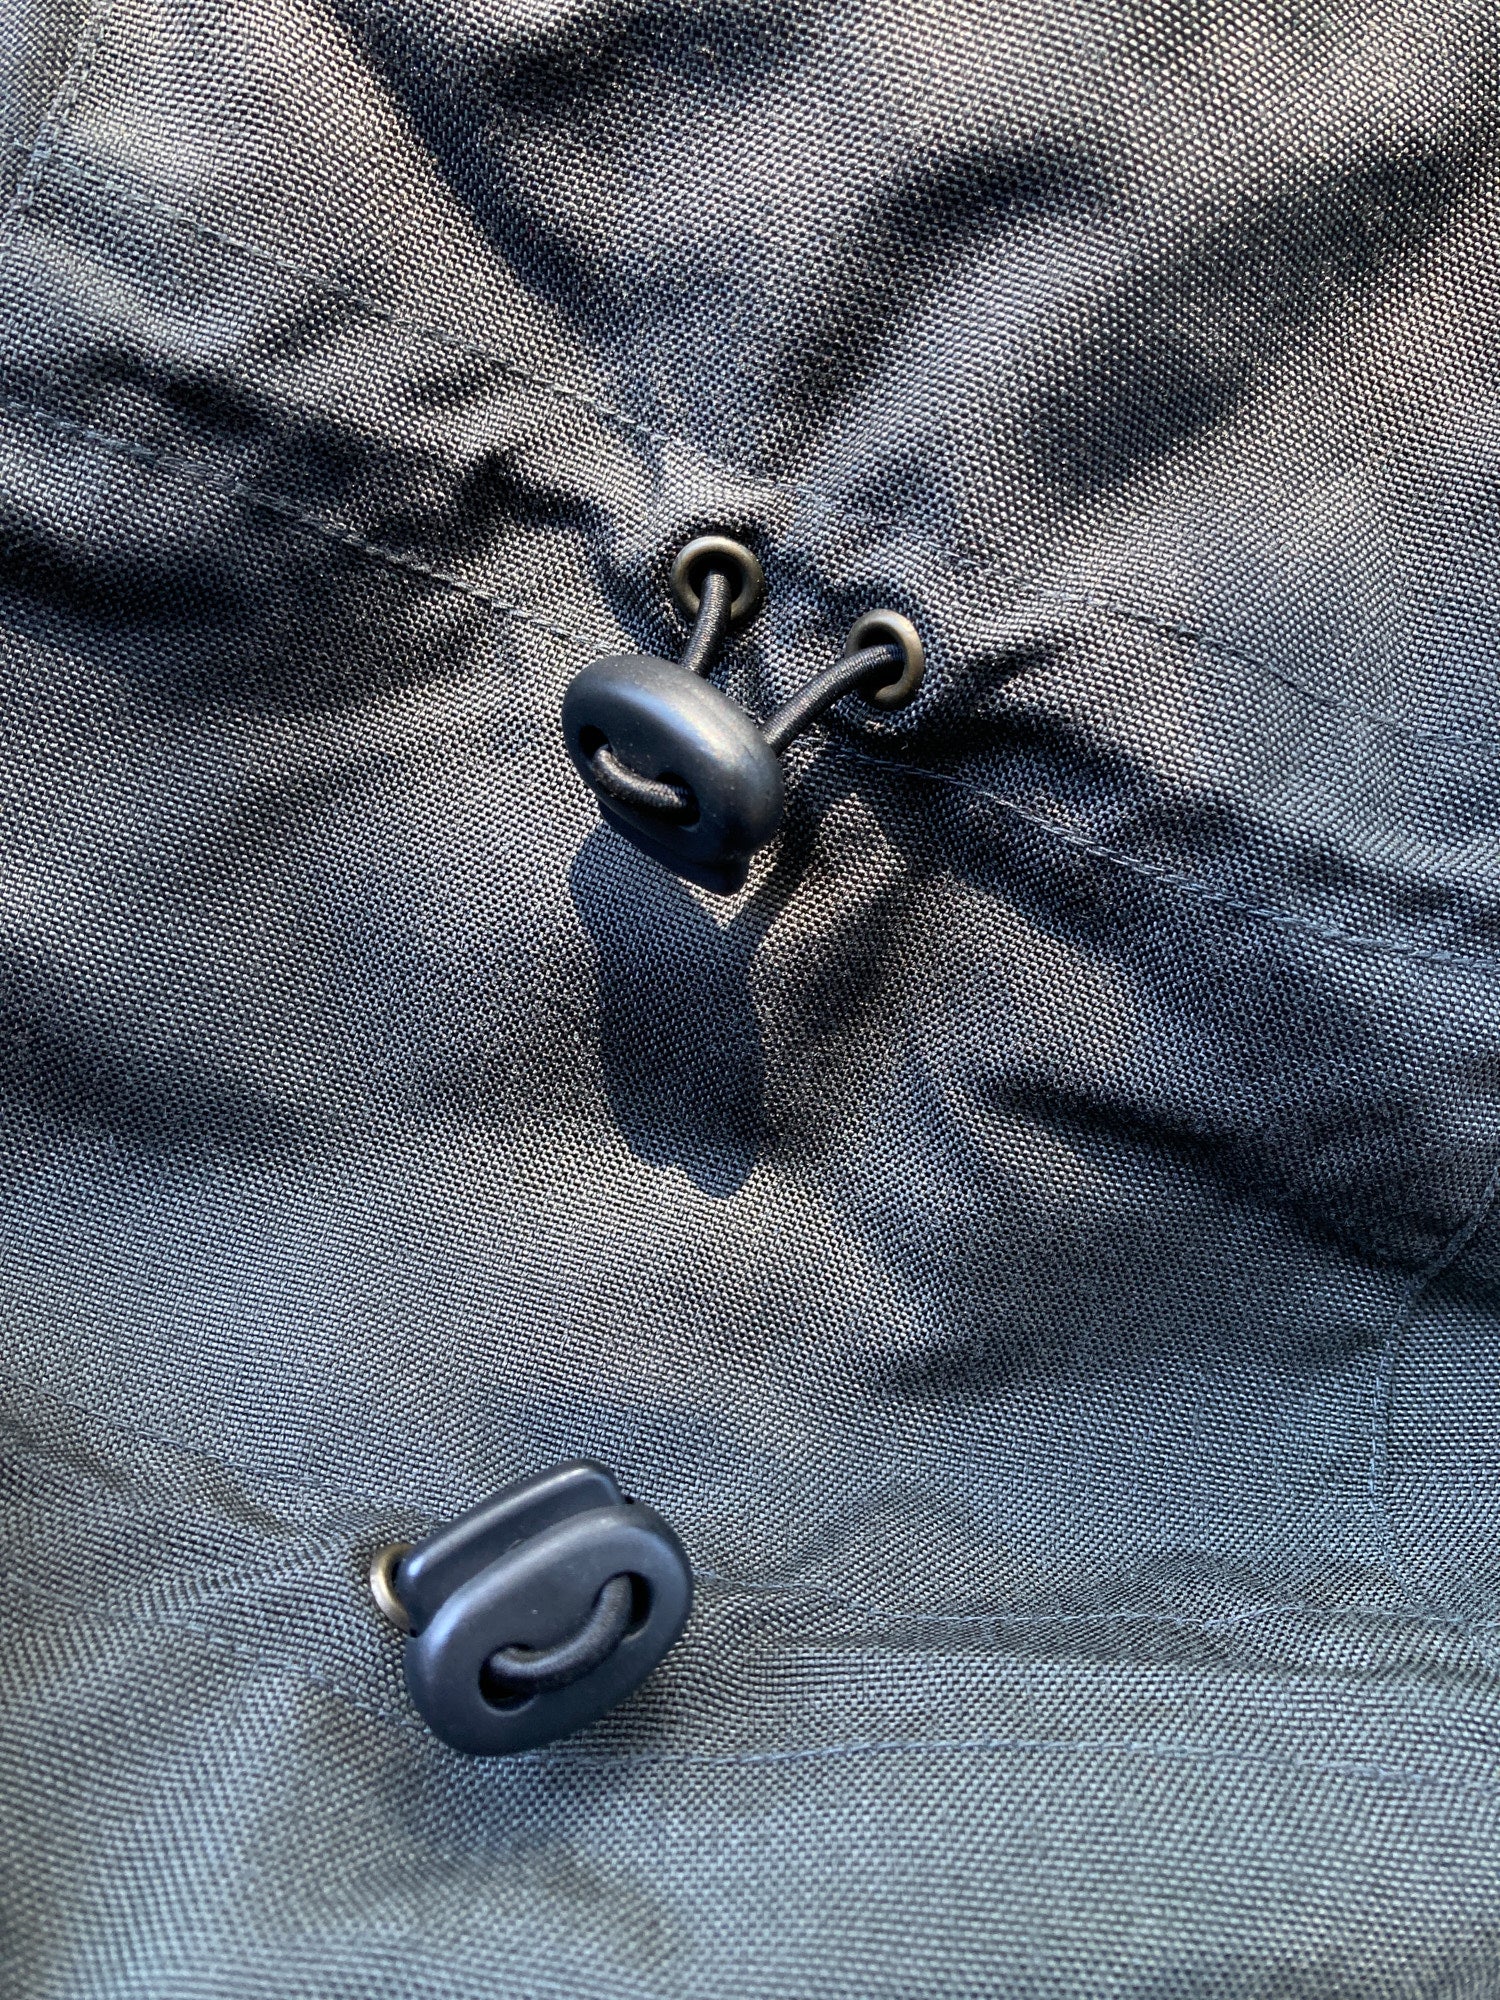 Levi’s Engineered Jeans dark green-grey nylon hooded crotch flap parka